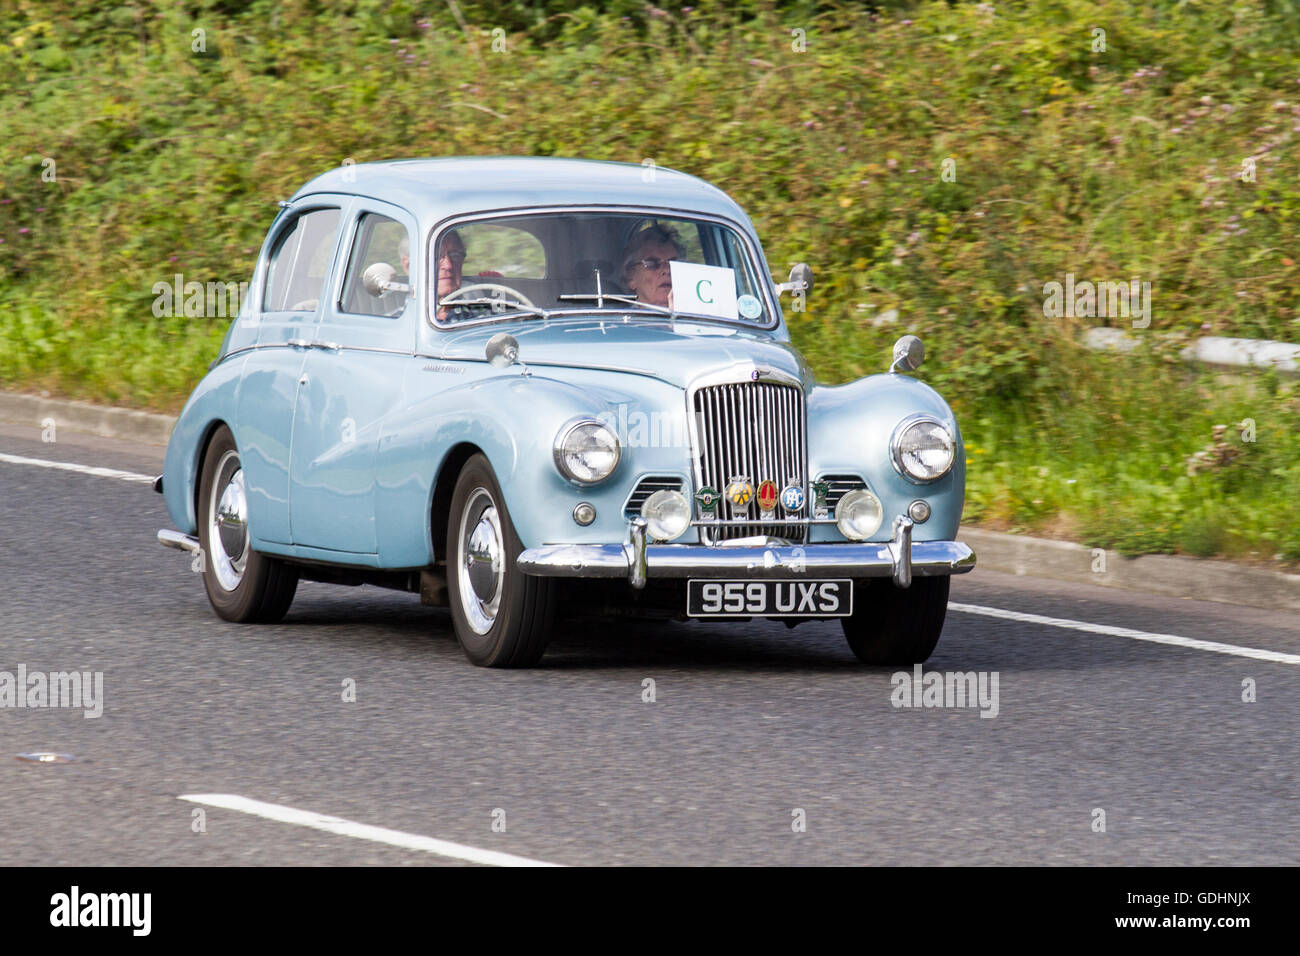 1954 50s blue Sunbeam; Fleetwood, Lancashire, UK. Vintage, classic, collectible, heritage, historics, prestige, cherished yesteryear vehicles car club motors at annual event. Stock Photo